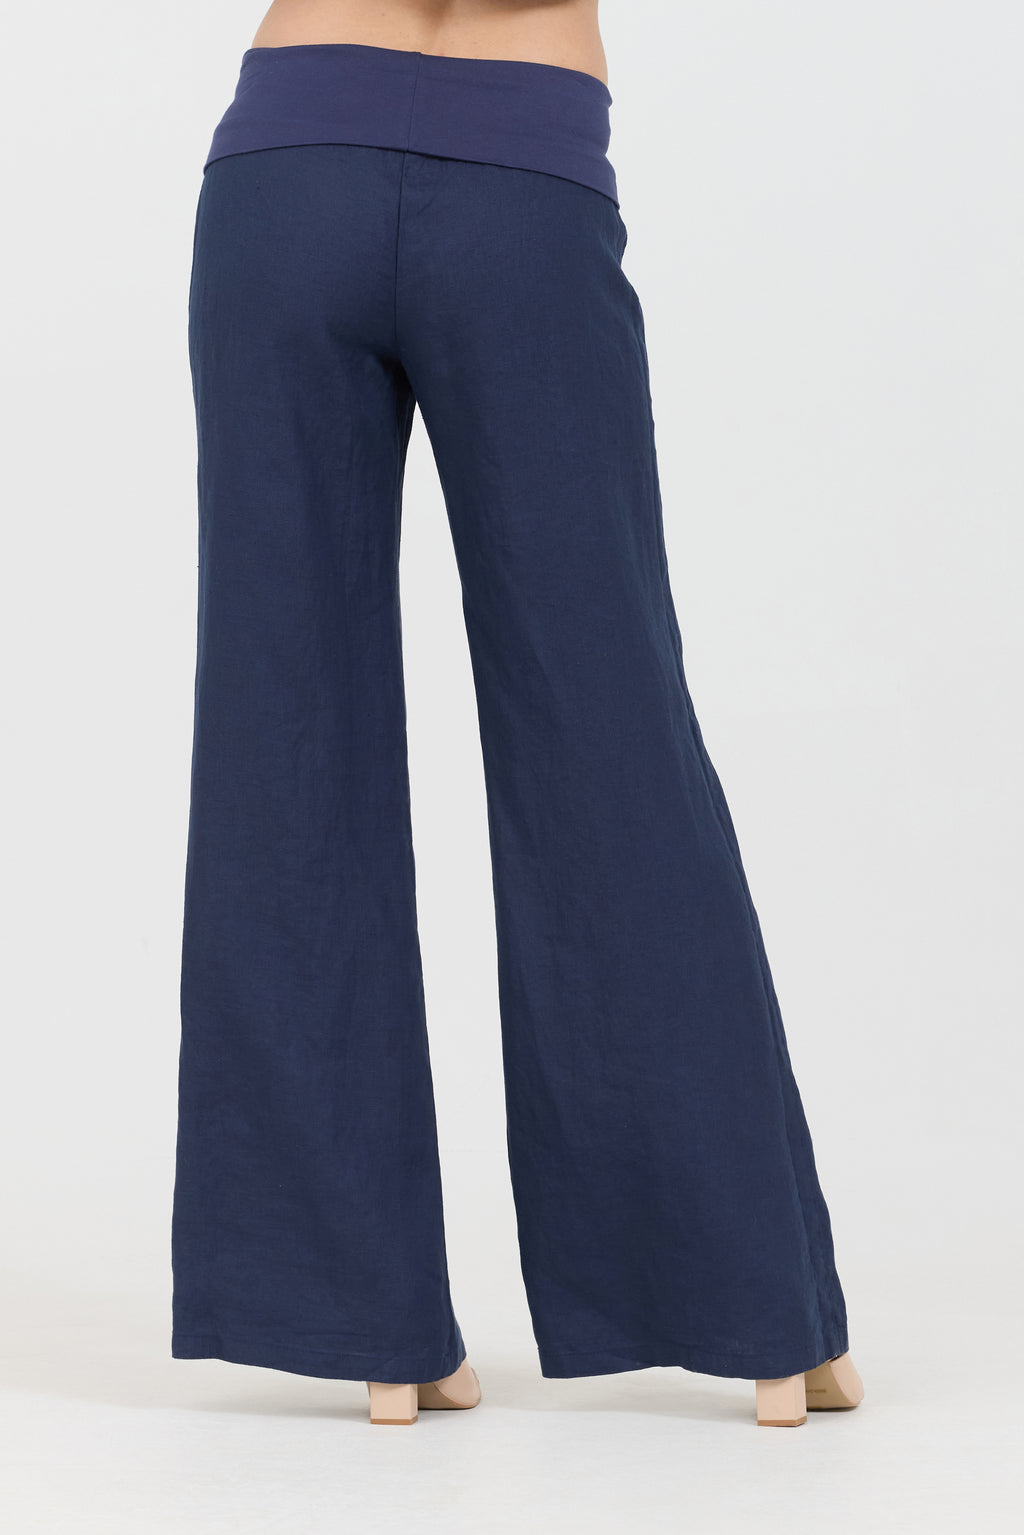 Linen Foldover Pants - Navy